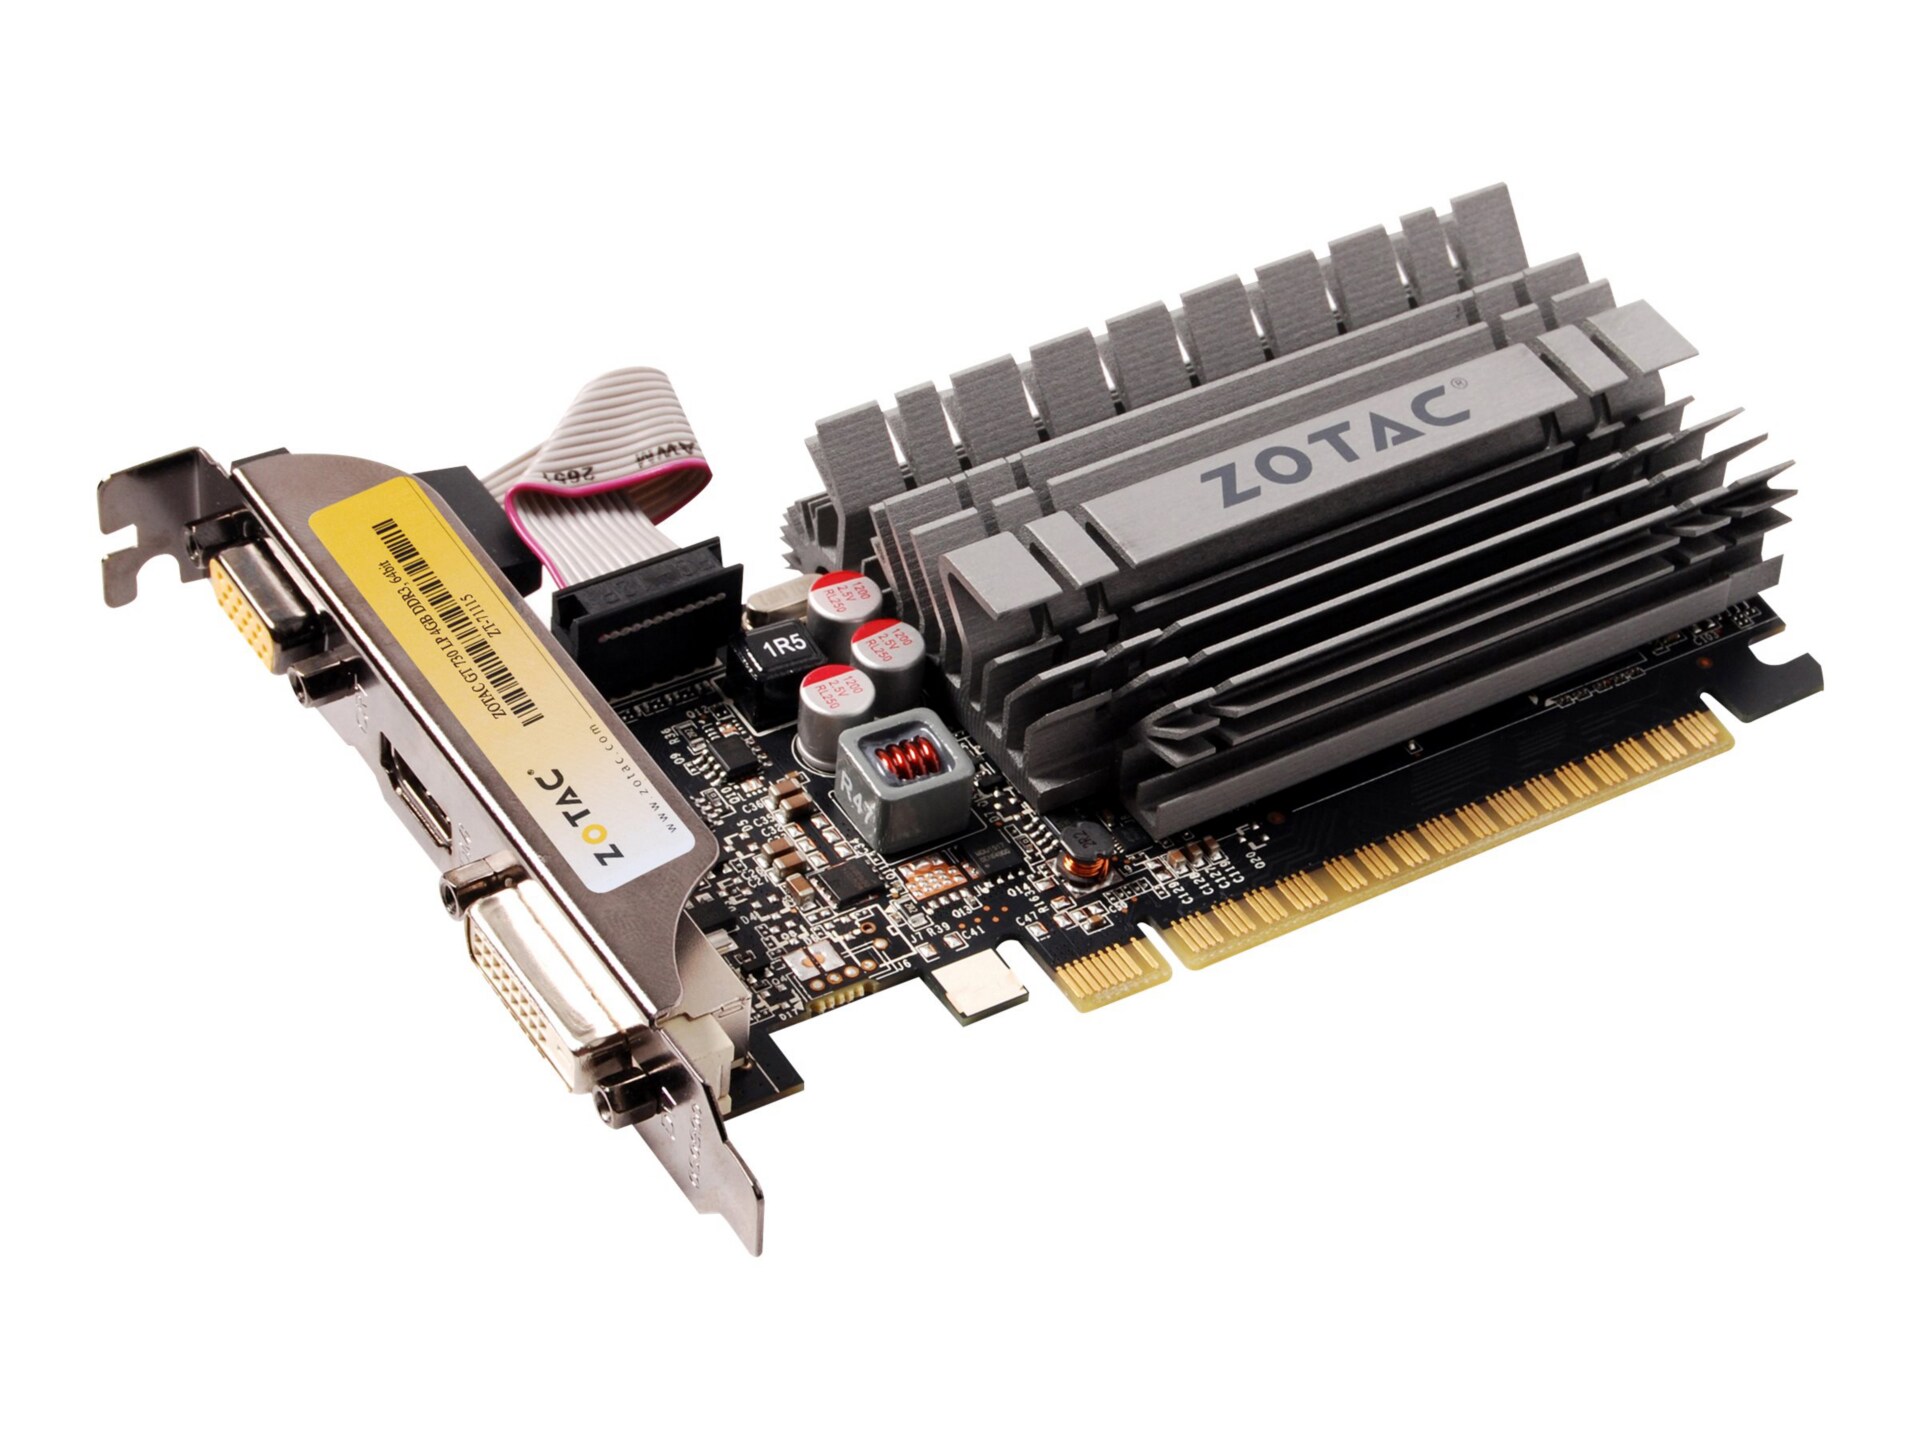 ZOTAC GeForce GT 730 - graphics card - GF GT 730 - 4 GB